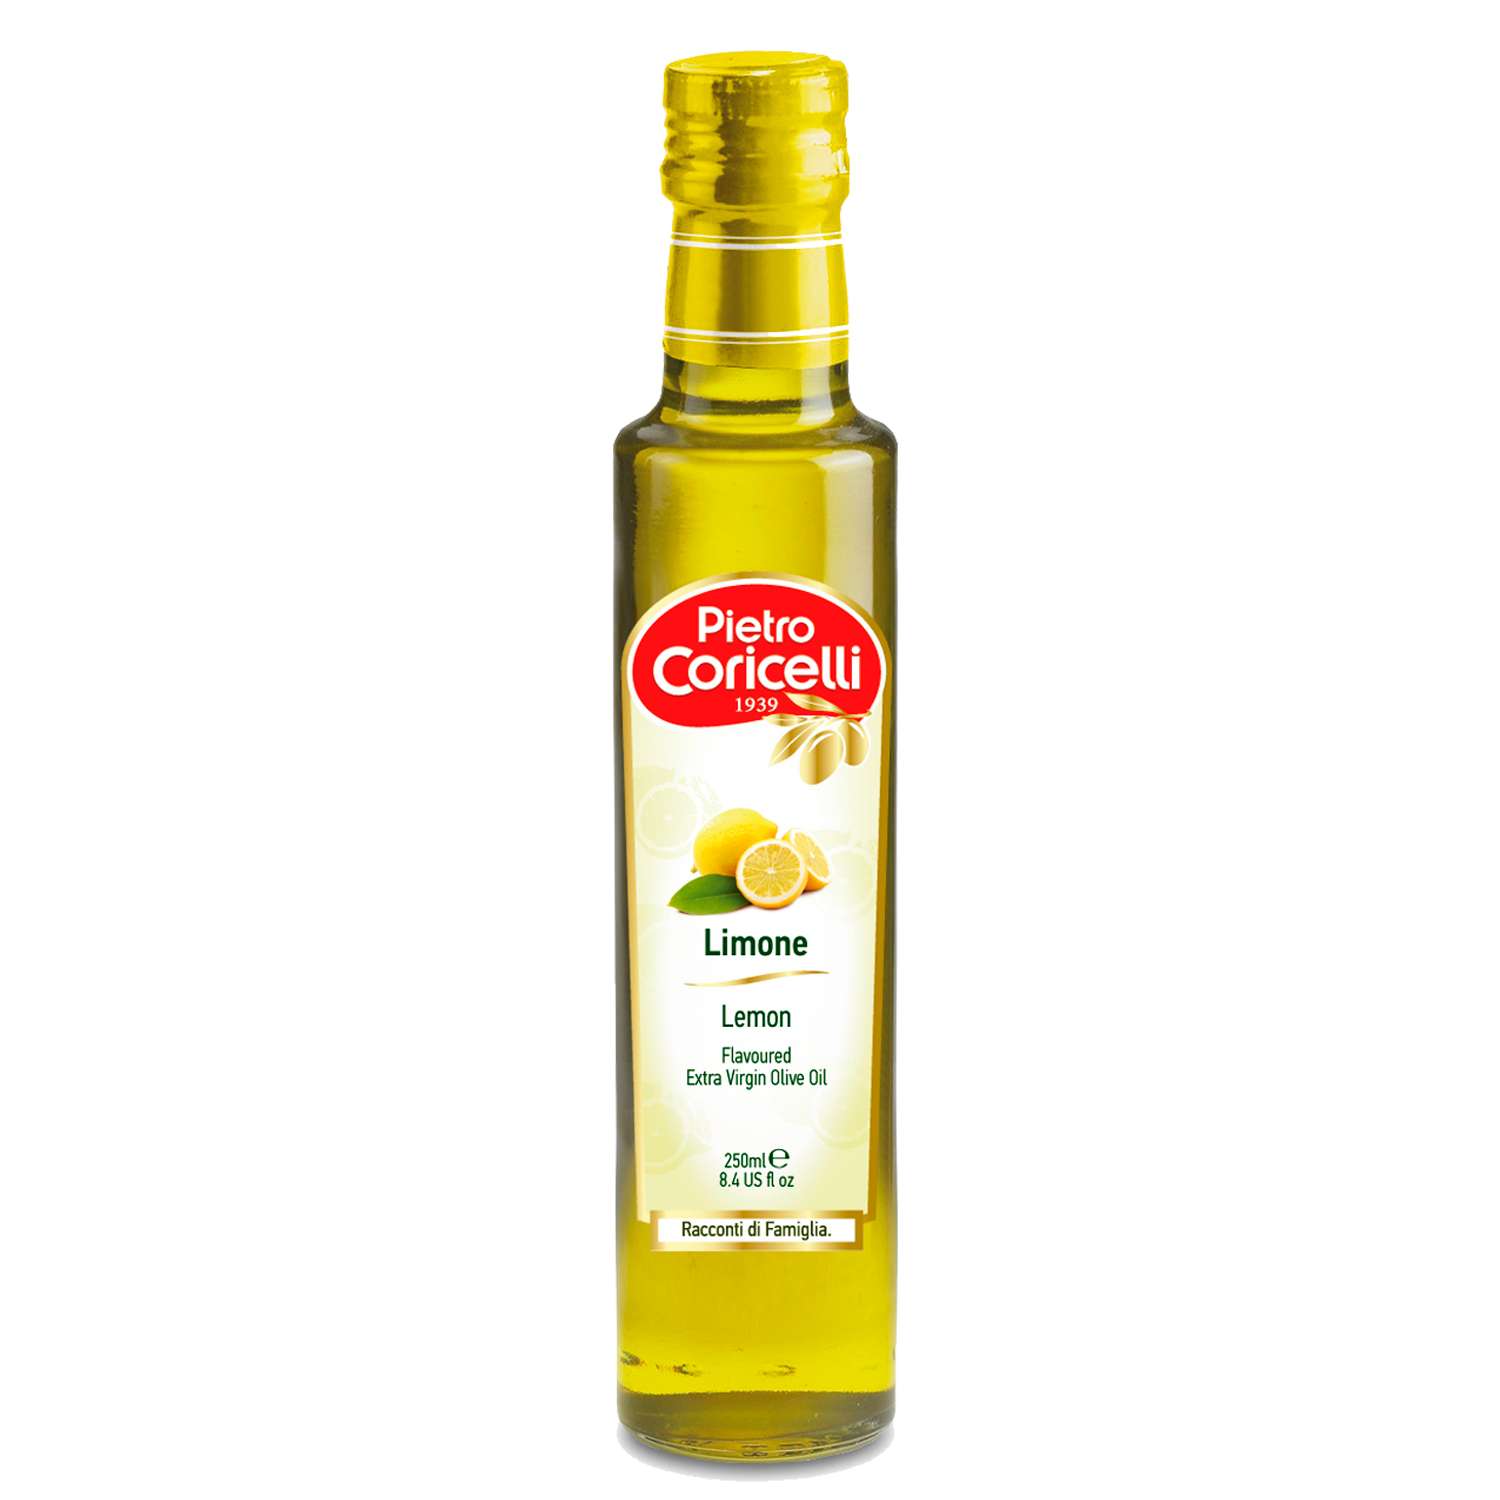 Coricelli оливковое масло. Коричелли масло оливковое. Хорошее ли оливковое масло Pietro Coricelli. Масло оливковое Пьетро Коричелли отзывы. Масло оливковое для жарки Пиетро КОРИЦЕЛЛИ.